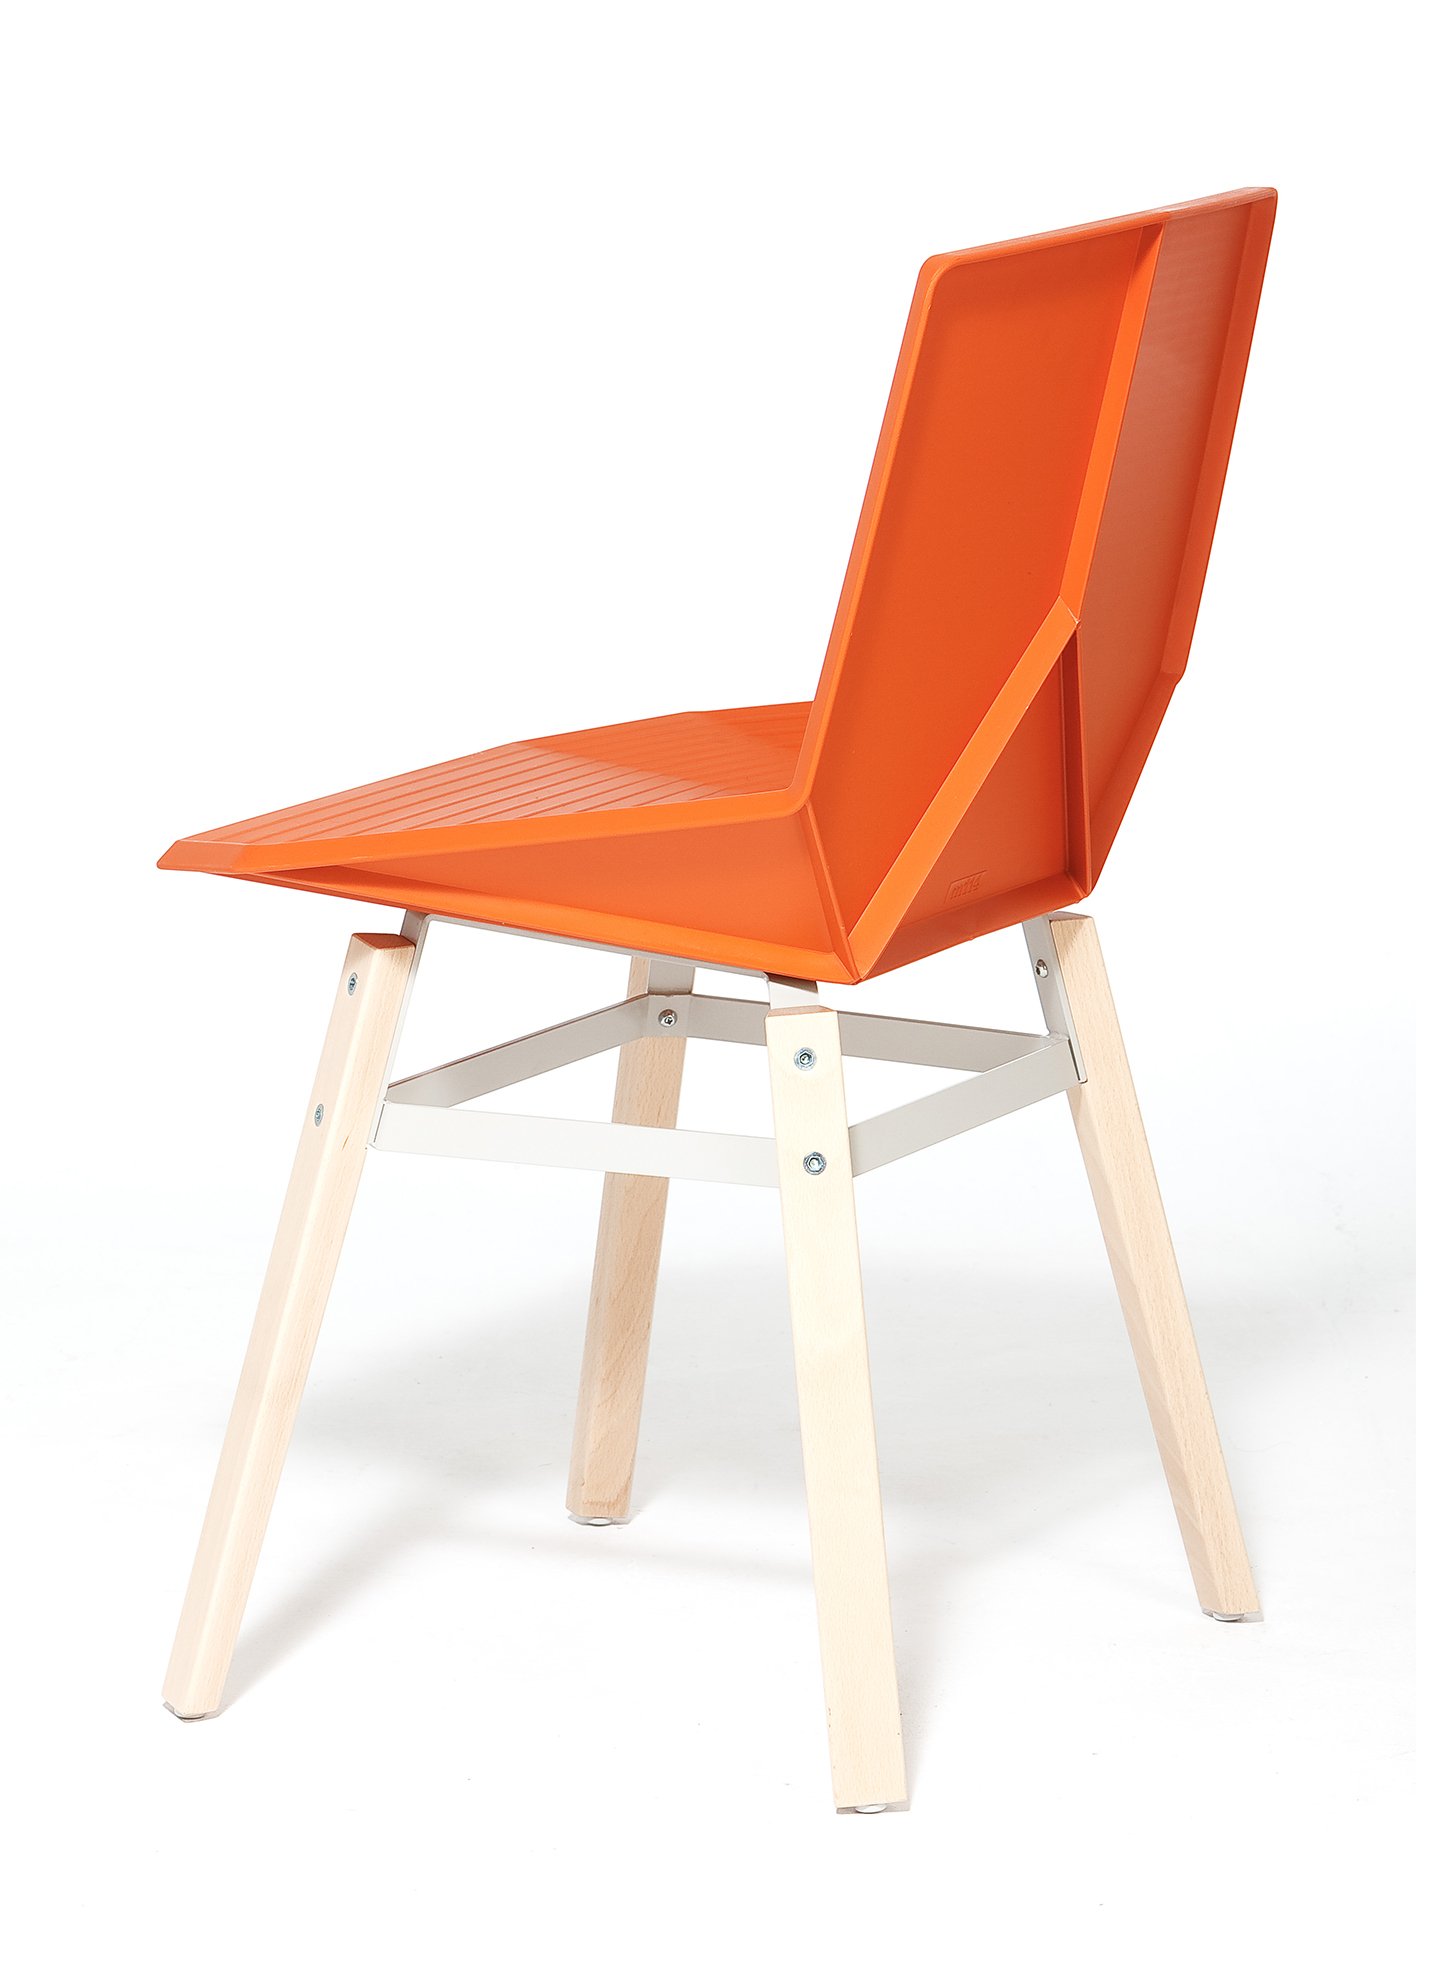 Silla Green colours naranja y patas de madera producida por Mobles 114